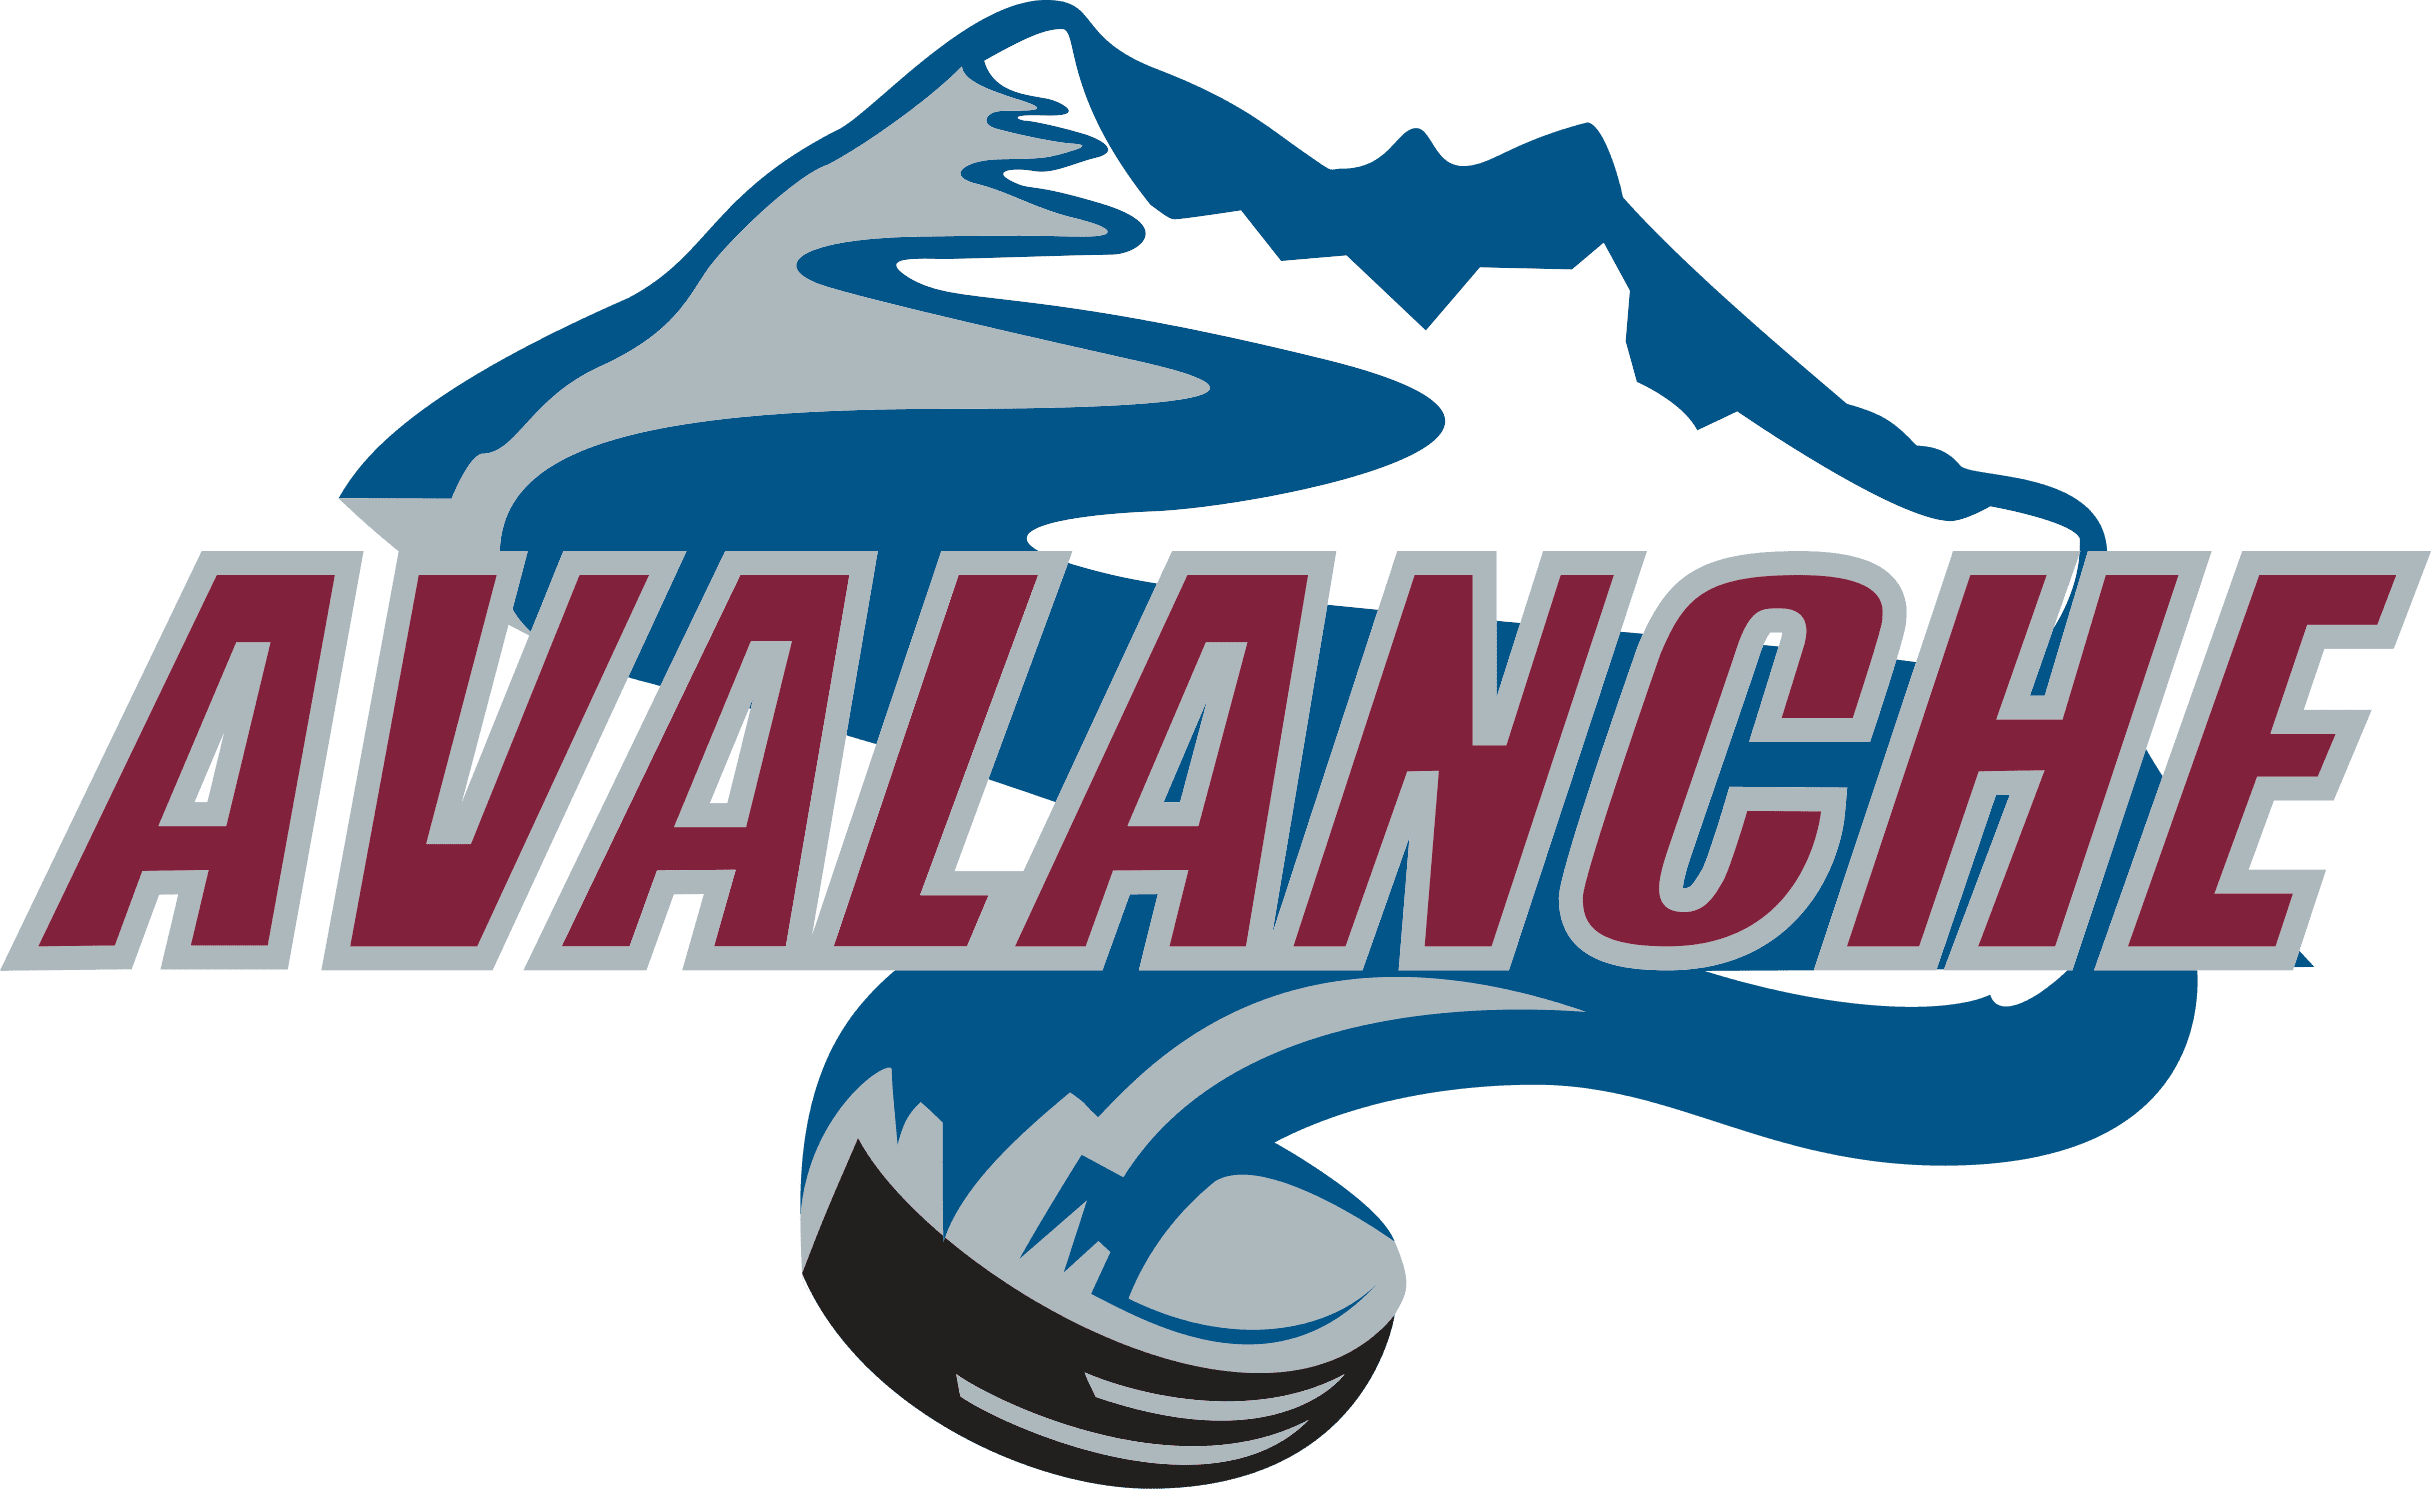 Colorado Avalanche Official Logo PNG Images Transparent Background